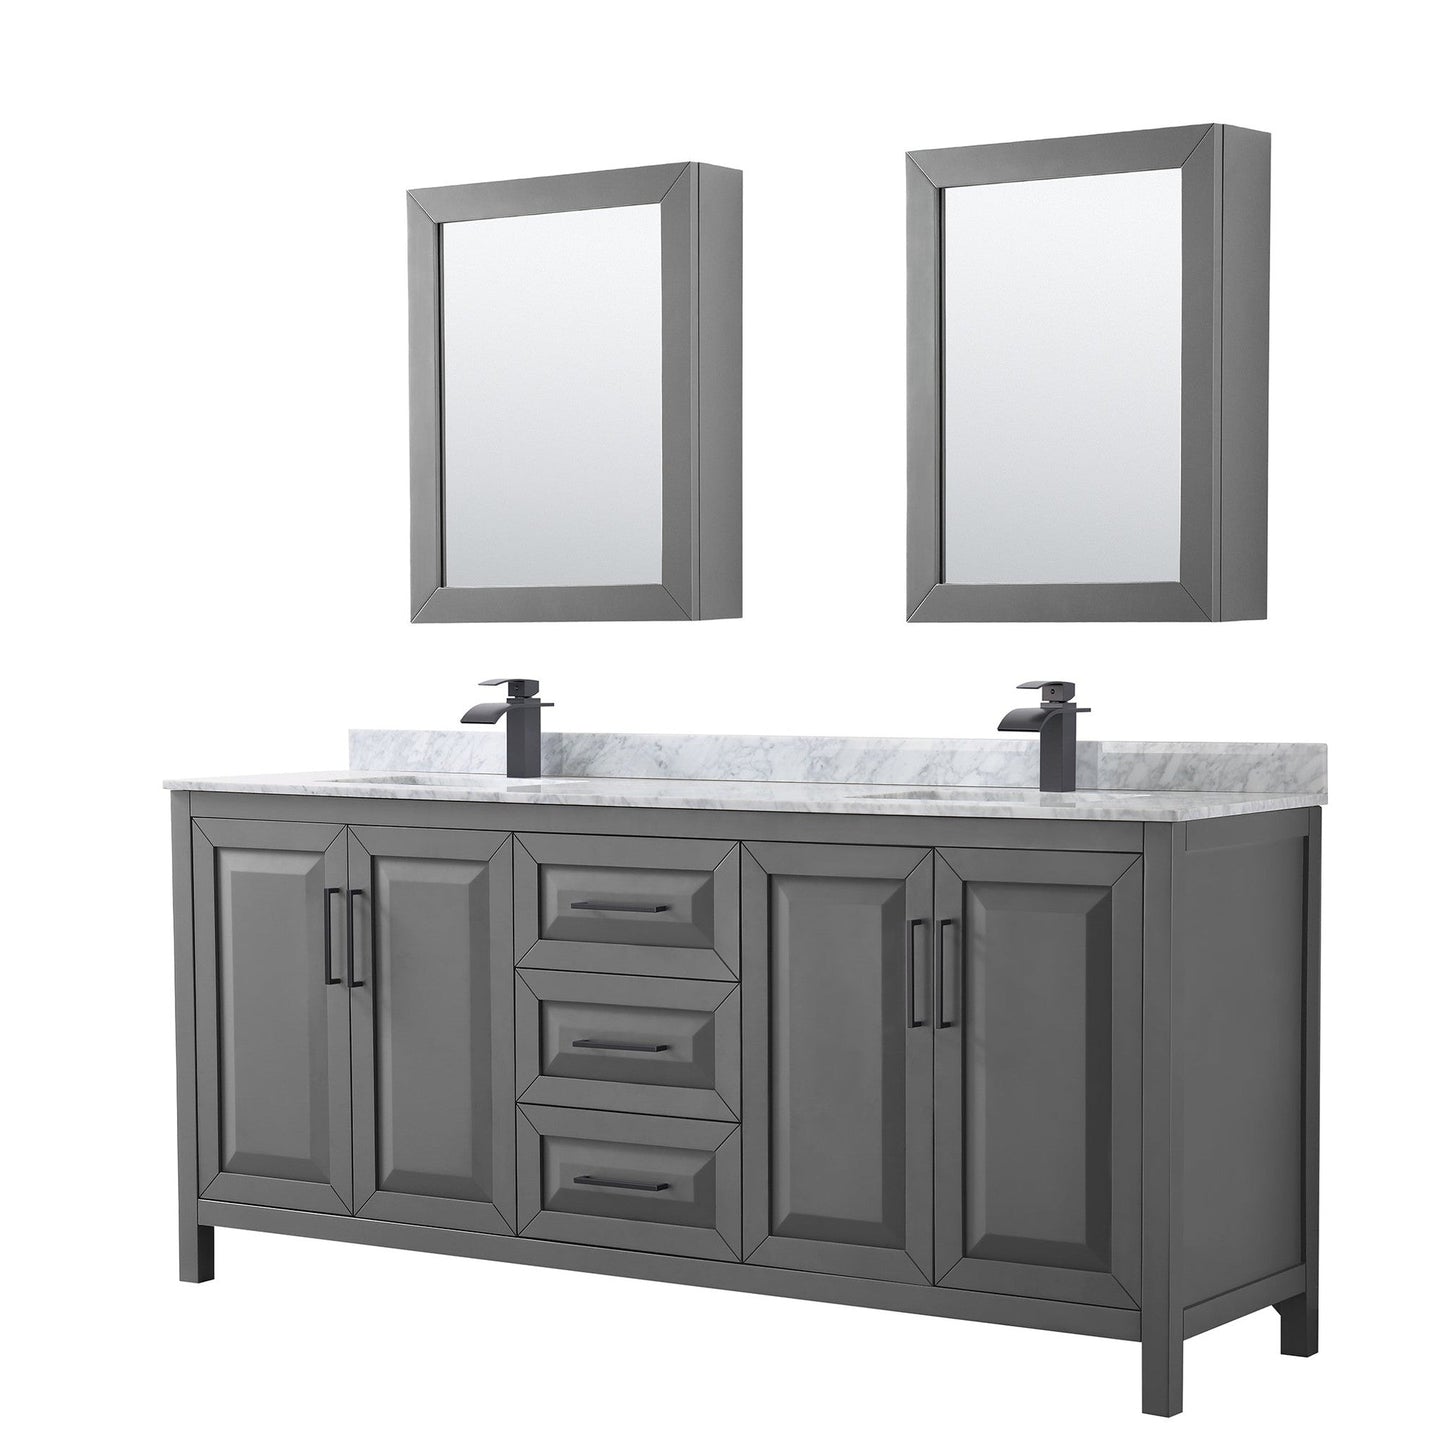 Daria 80" Double Bathroom Vanity in Dark Gray, White Carrara Marble Countertop, Undermount Square Sinks, Matte Black Trim, Medicine Cabinets